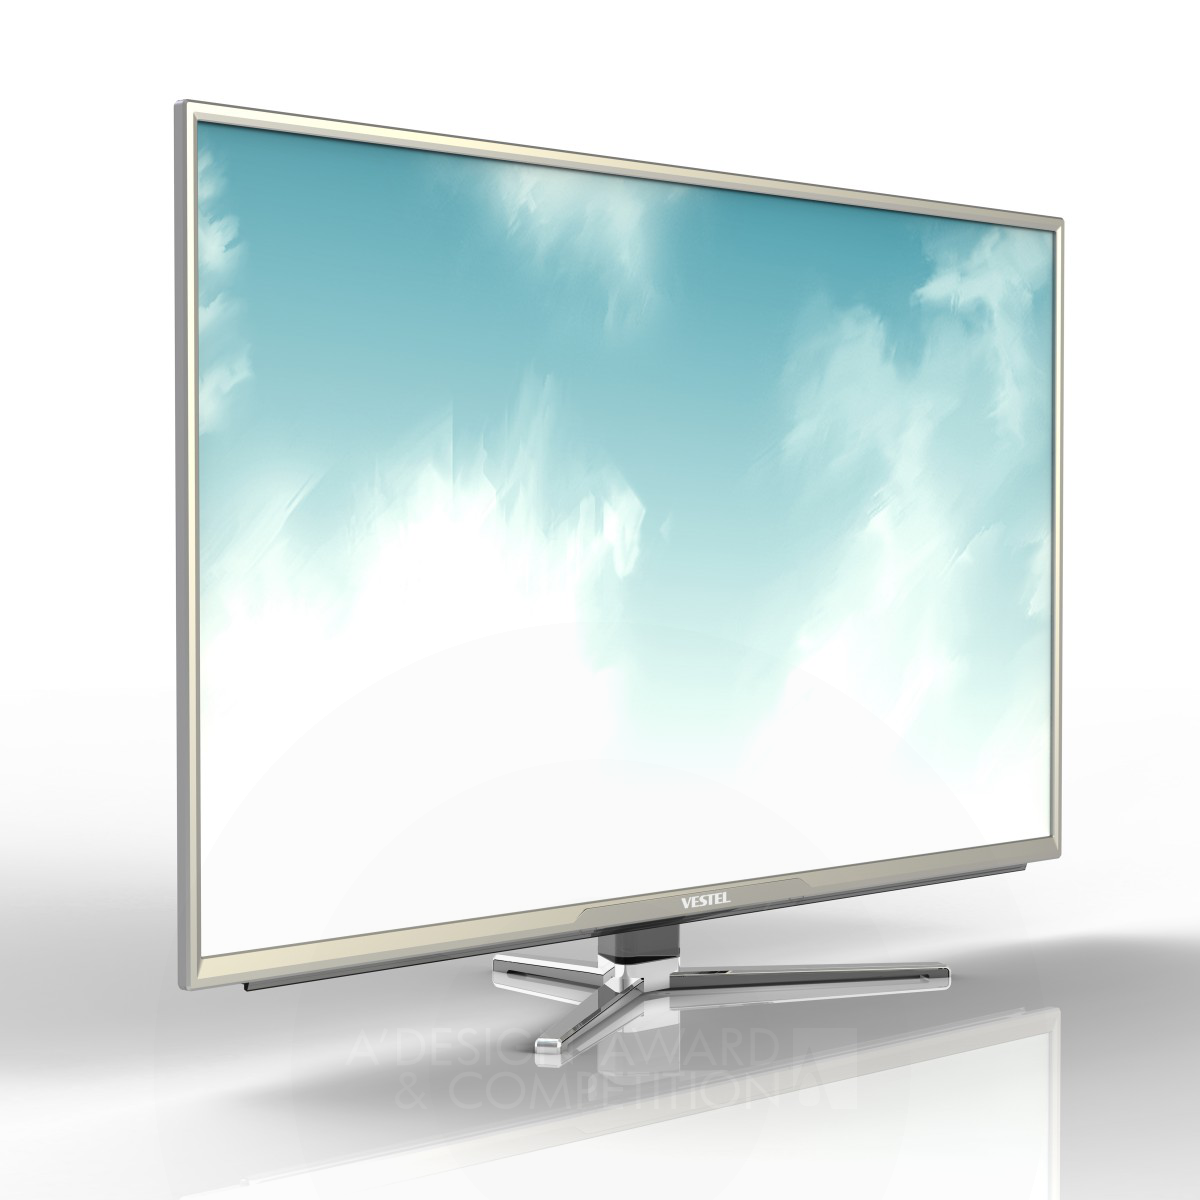 Agile 42" BMS LED TV by Vestel ID Team